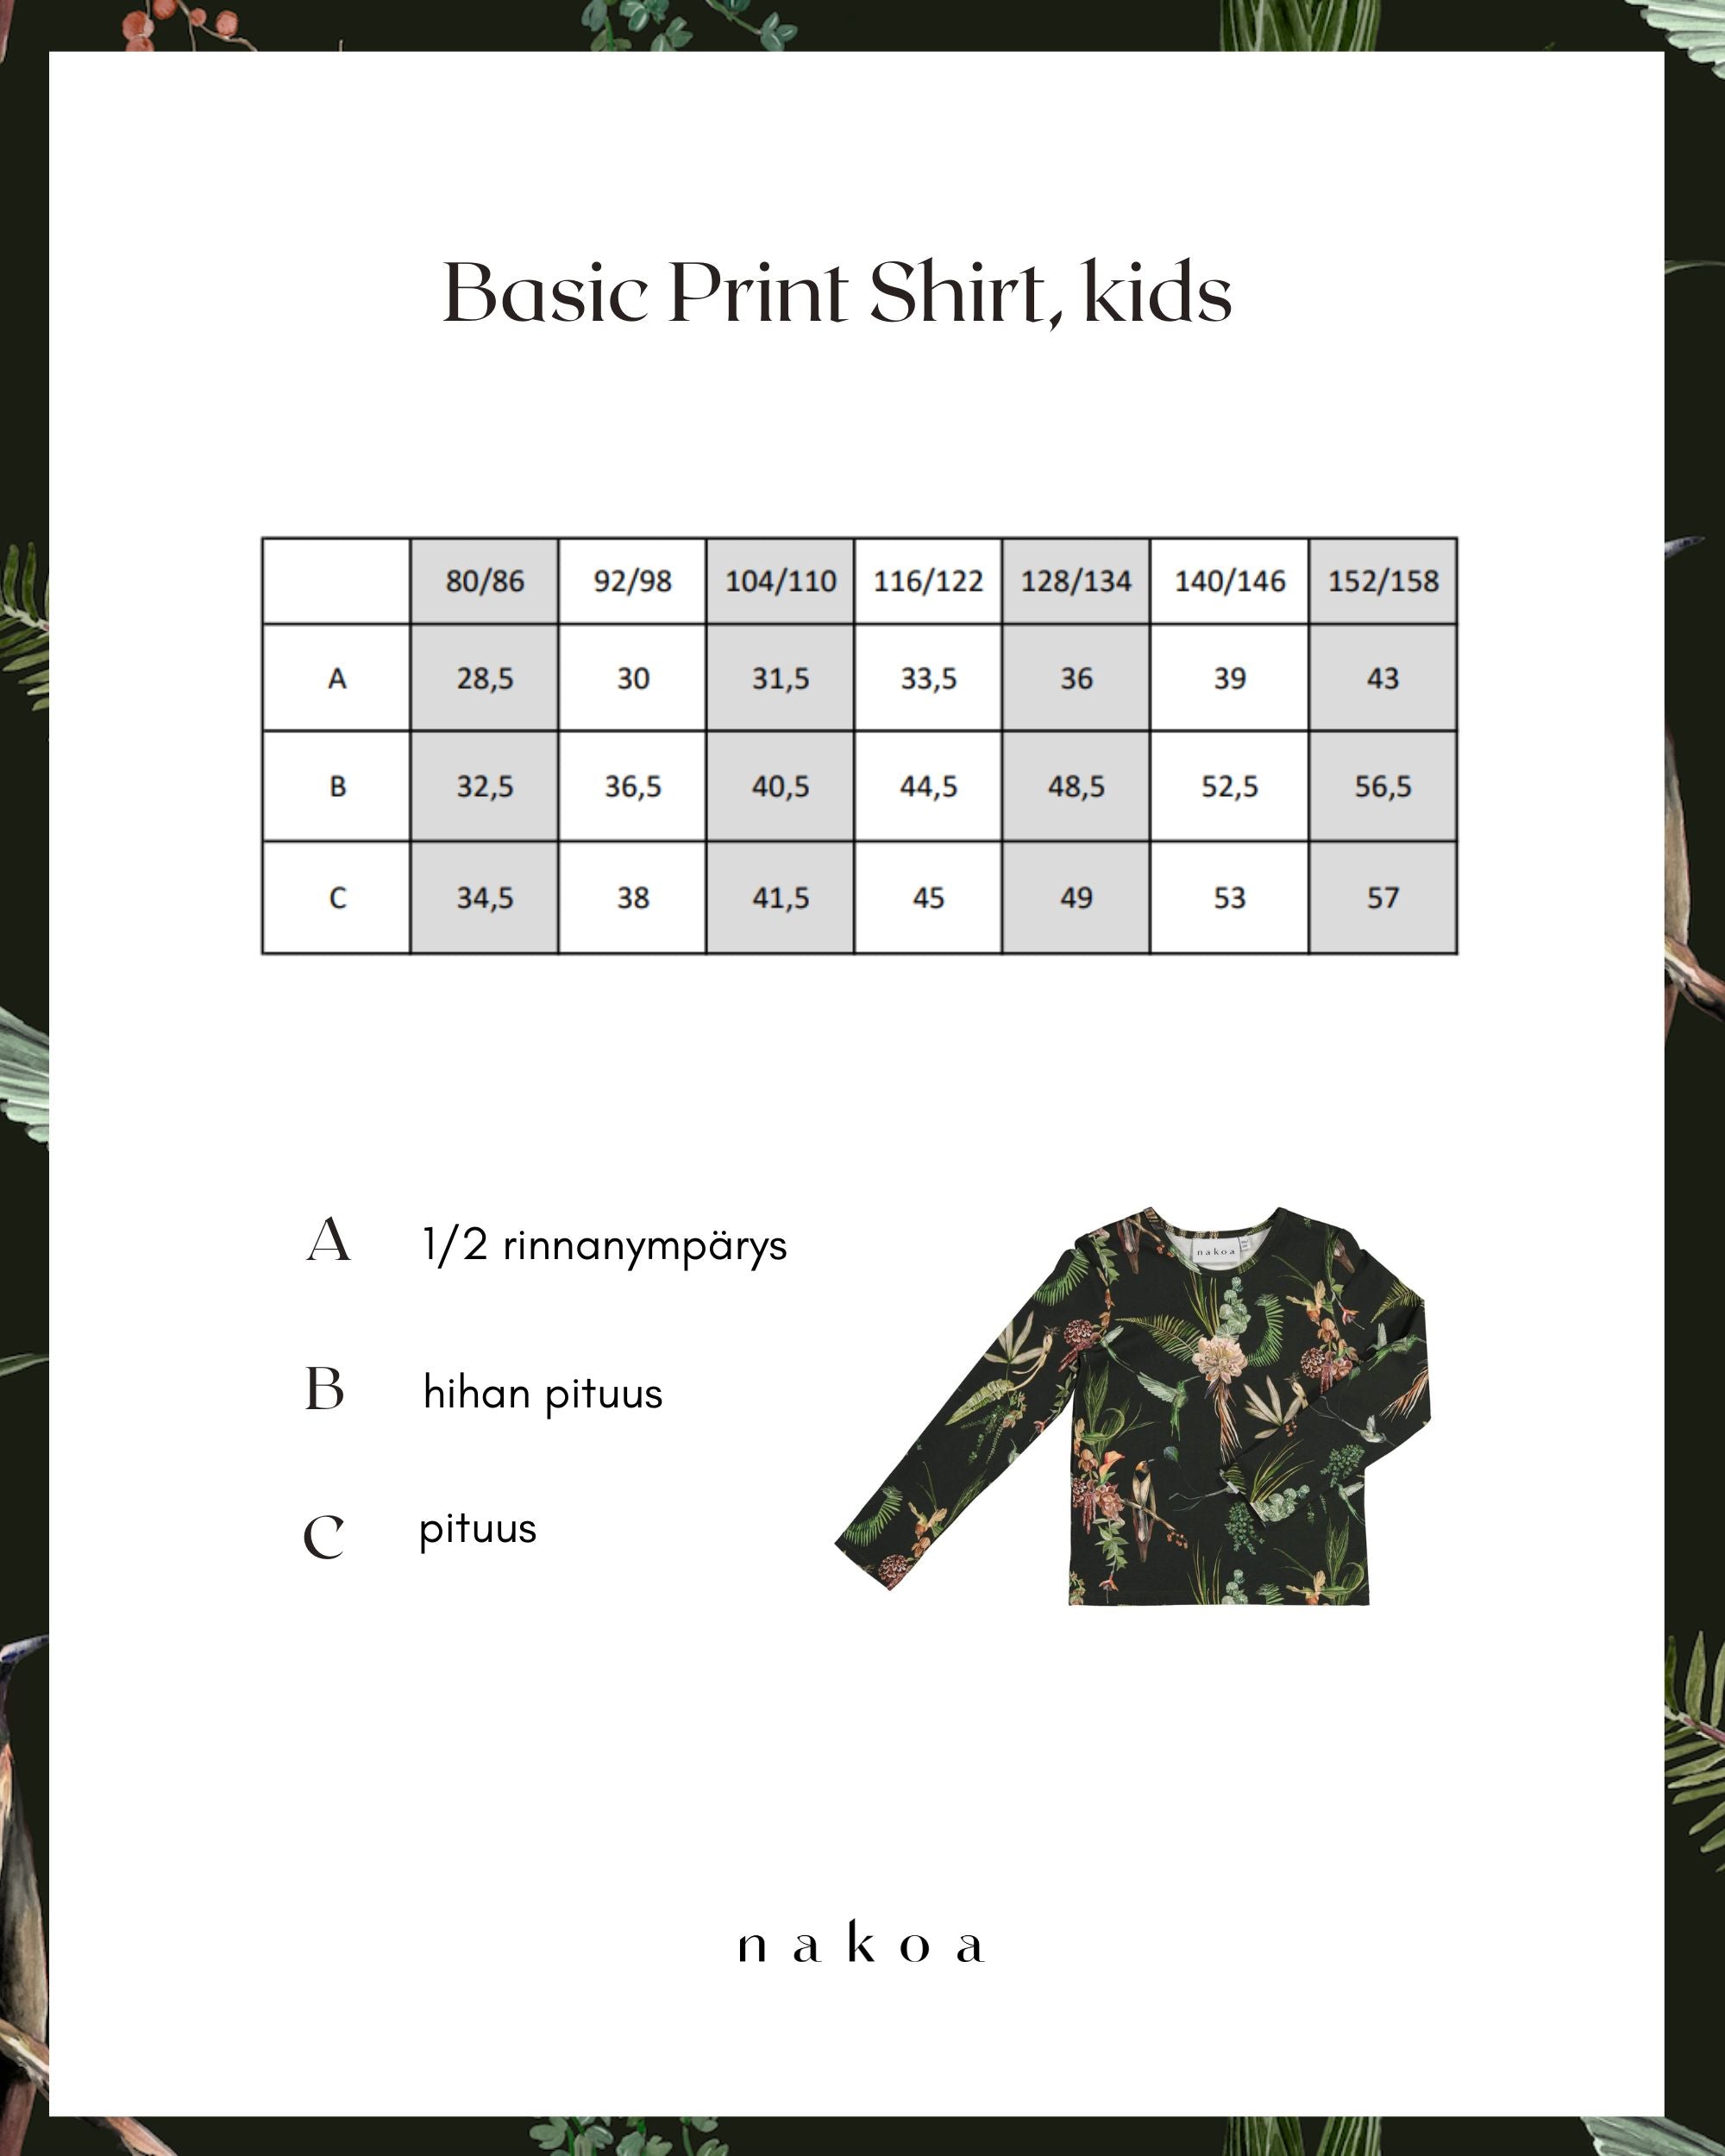 Basic Print Shirt, Mockingbird